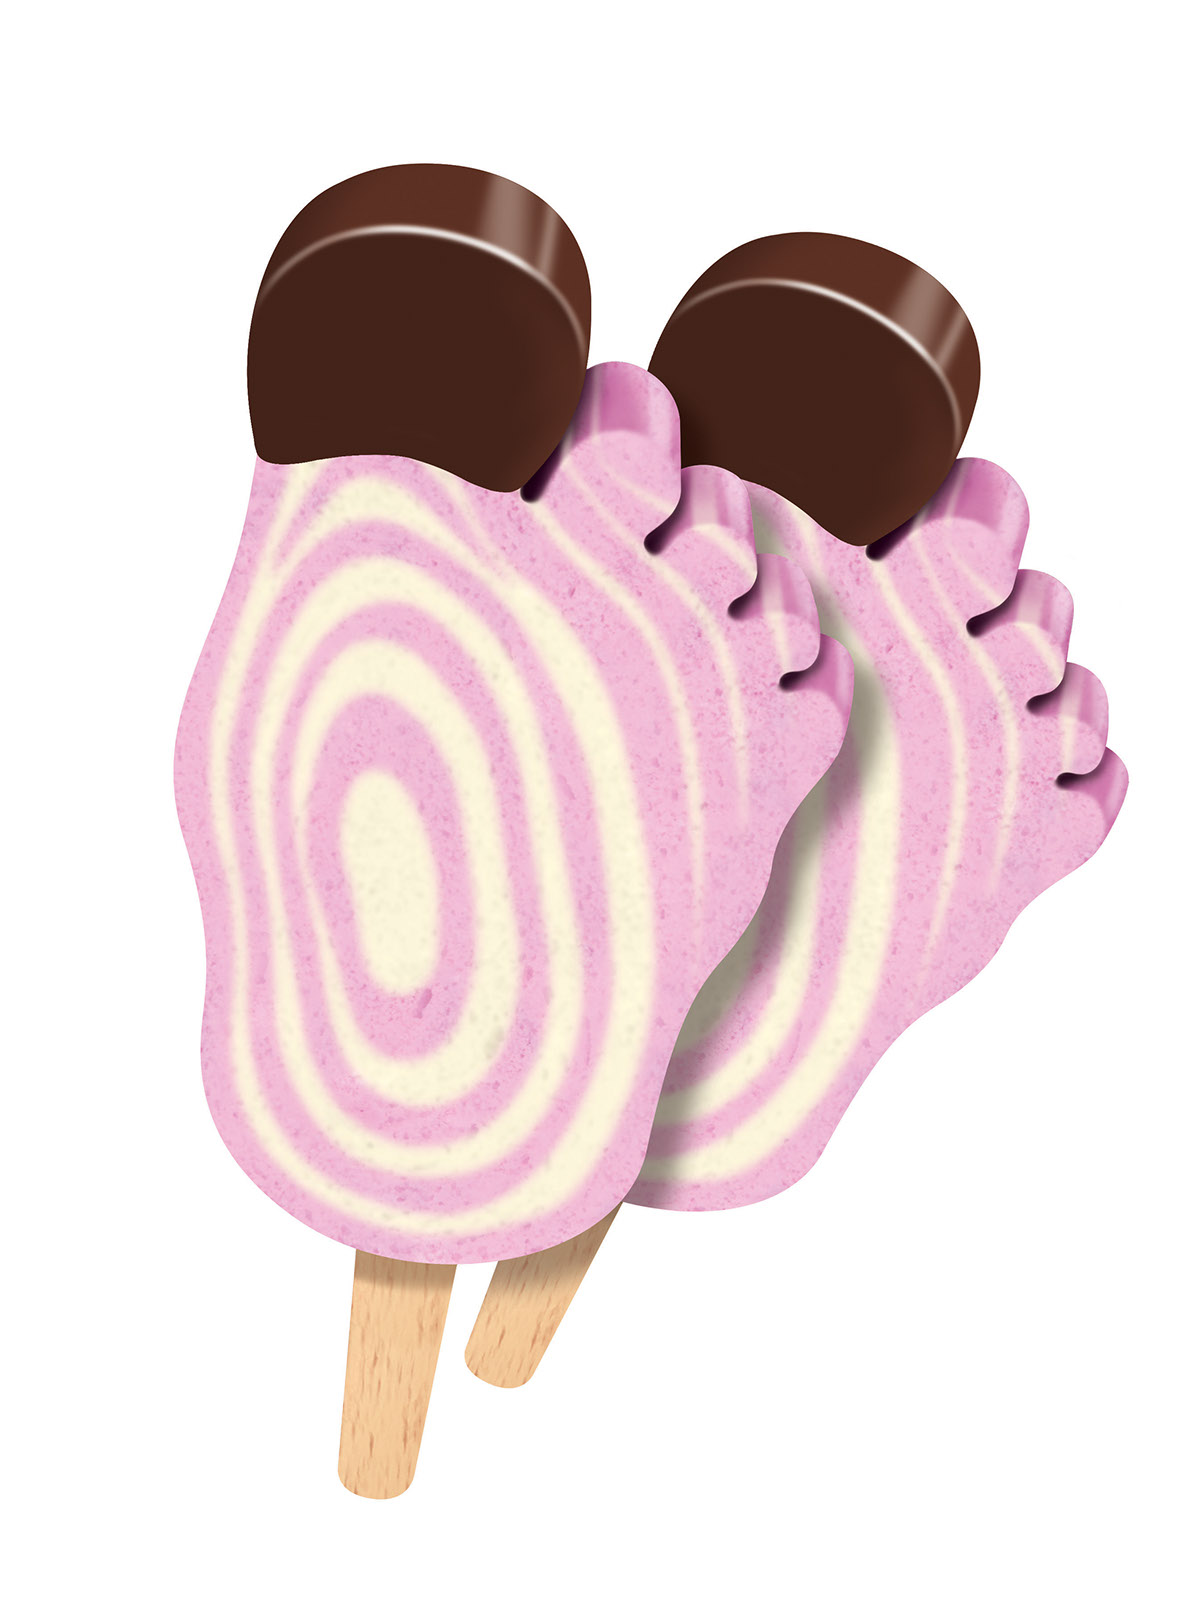 Food  ice cream Digital Art  photo illustration  ice pops CONFECTIONARY illustratorsireland